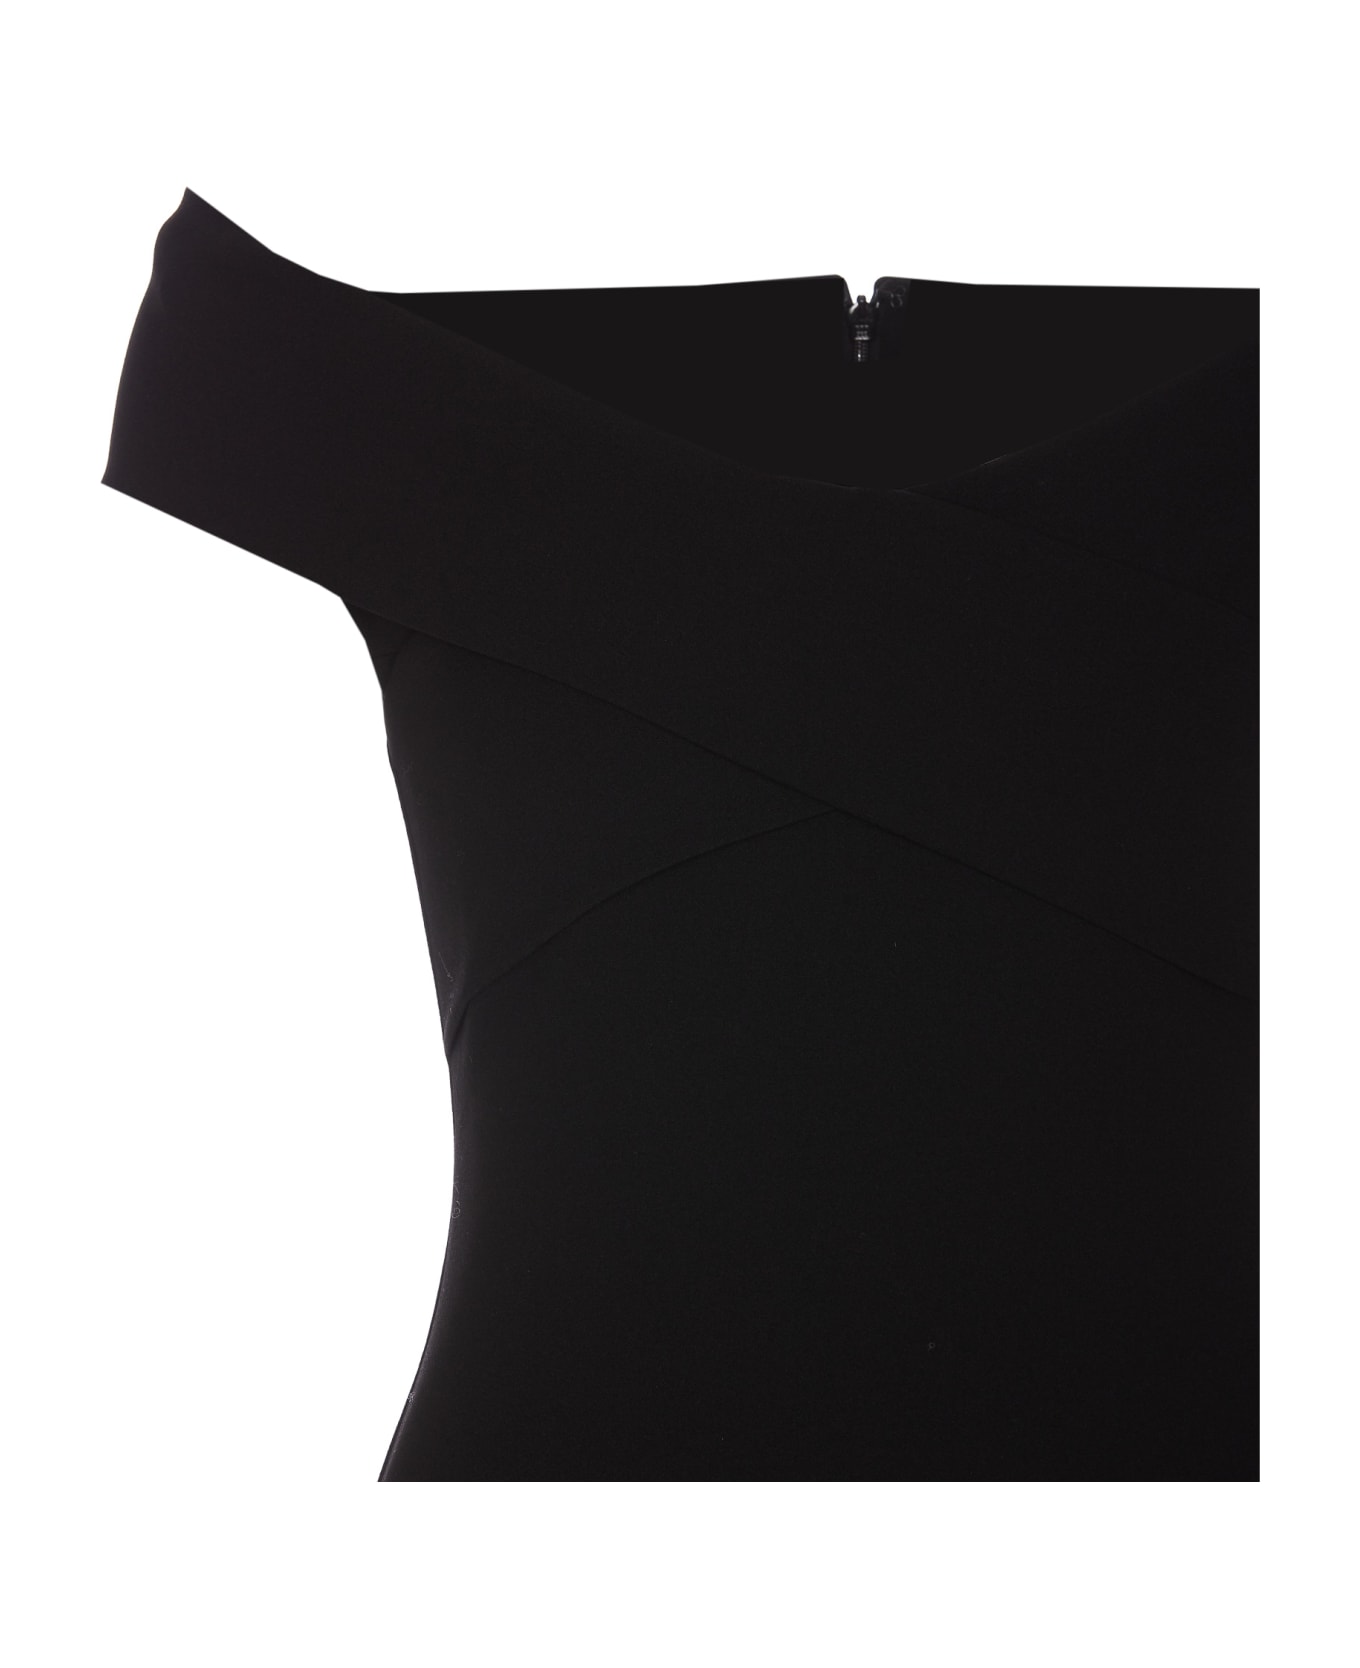 Solace London Ines Maxi Dress - Black ワンピース＆ドレス